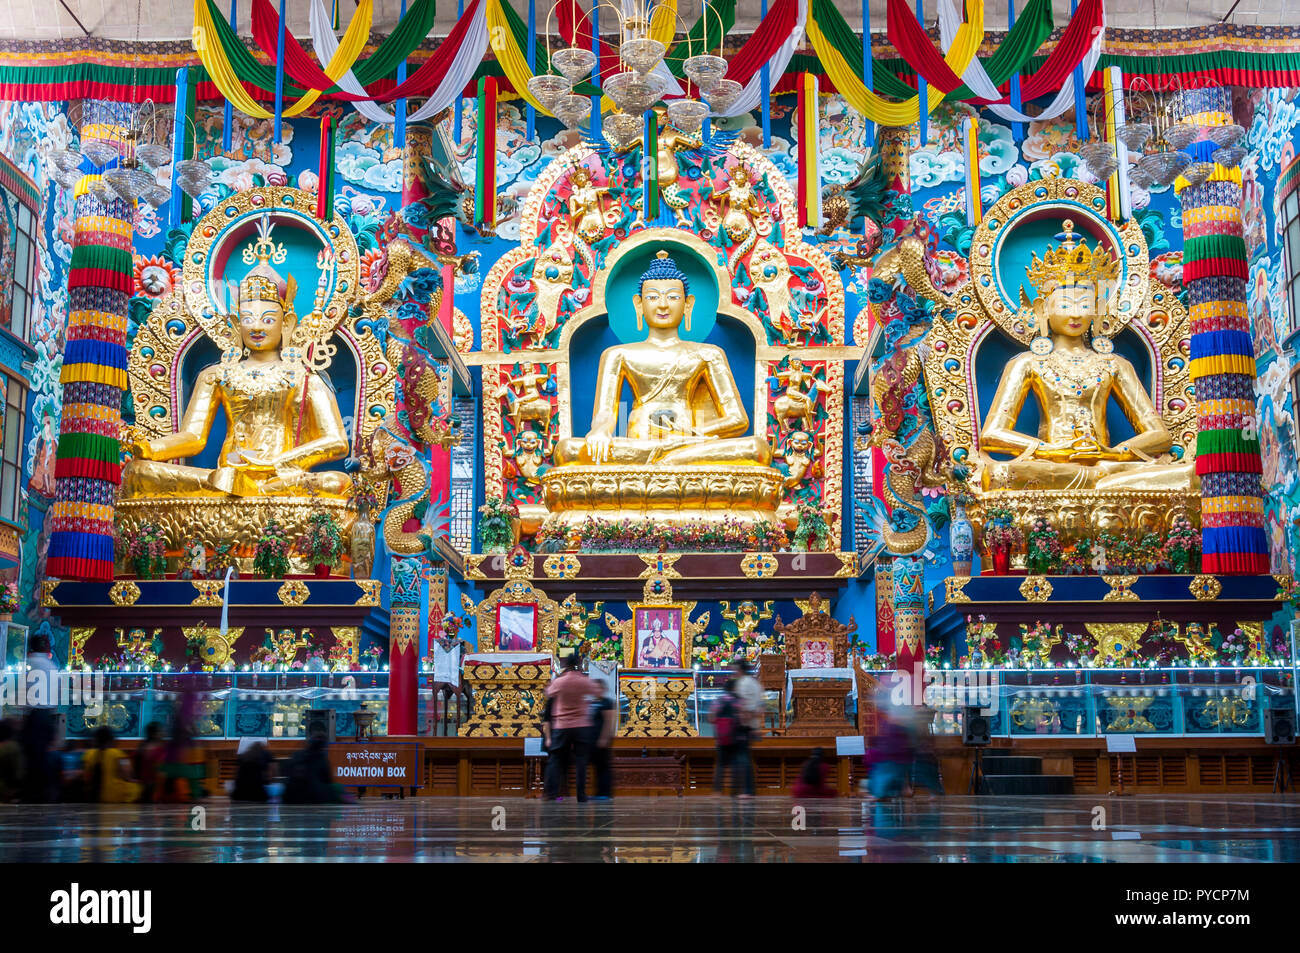 Bylakuppe, Karnataka, India - January 9, 2015: 18 meters high statues inside the Golden Temple - Padmasmbhava, the Buddha and Amitayus. Stock Photo